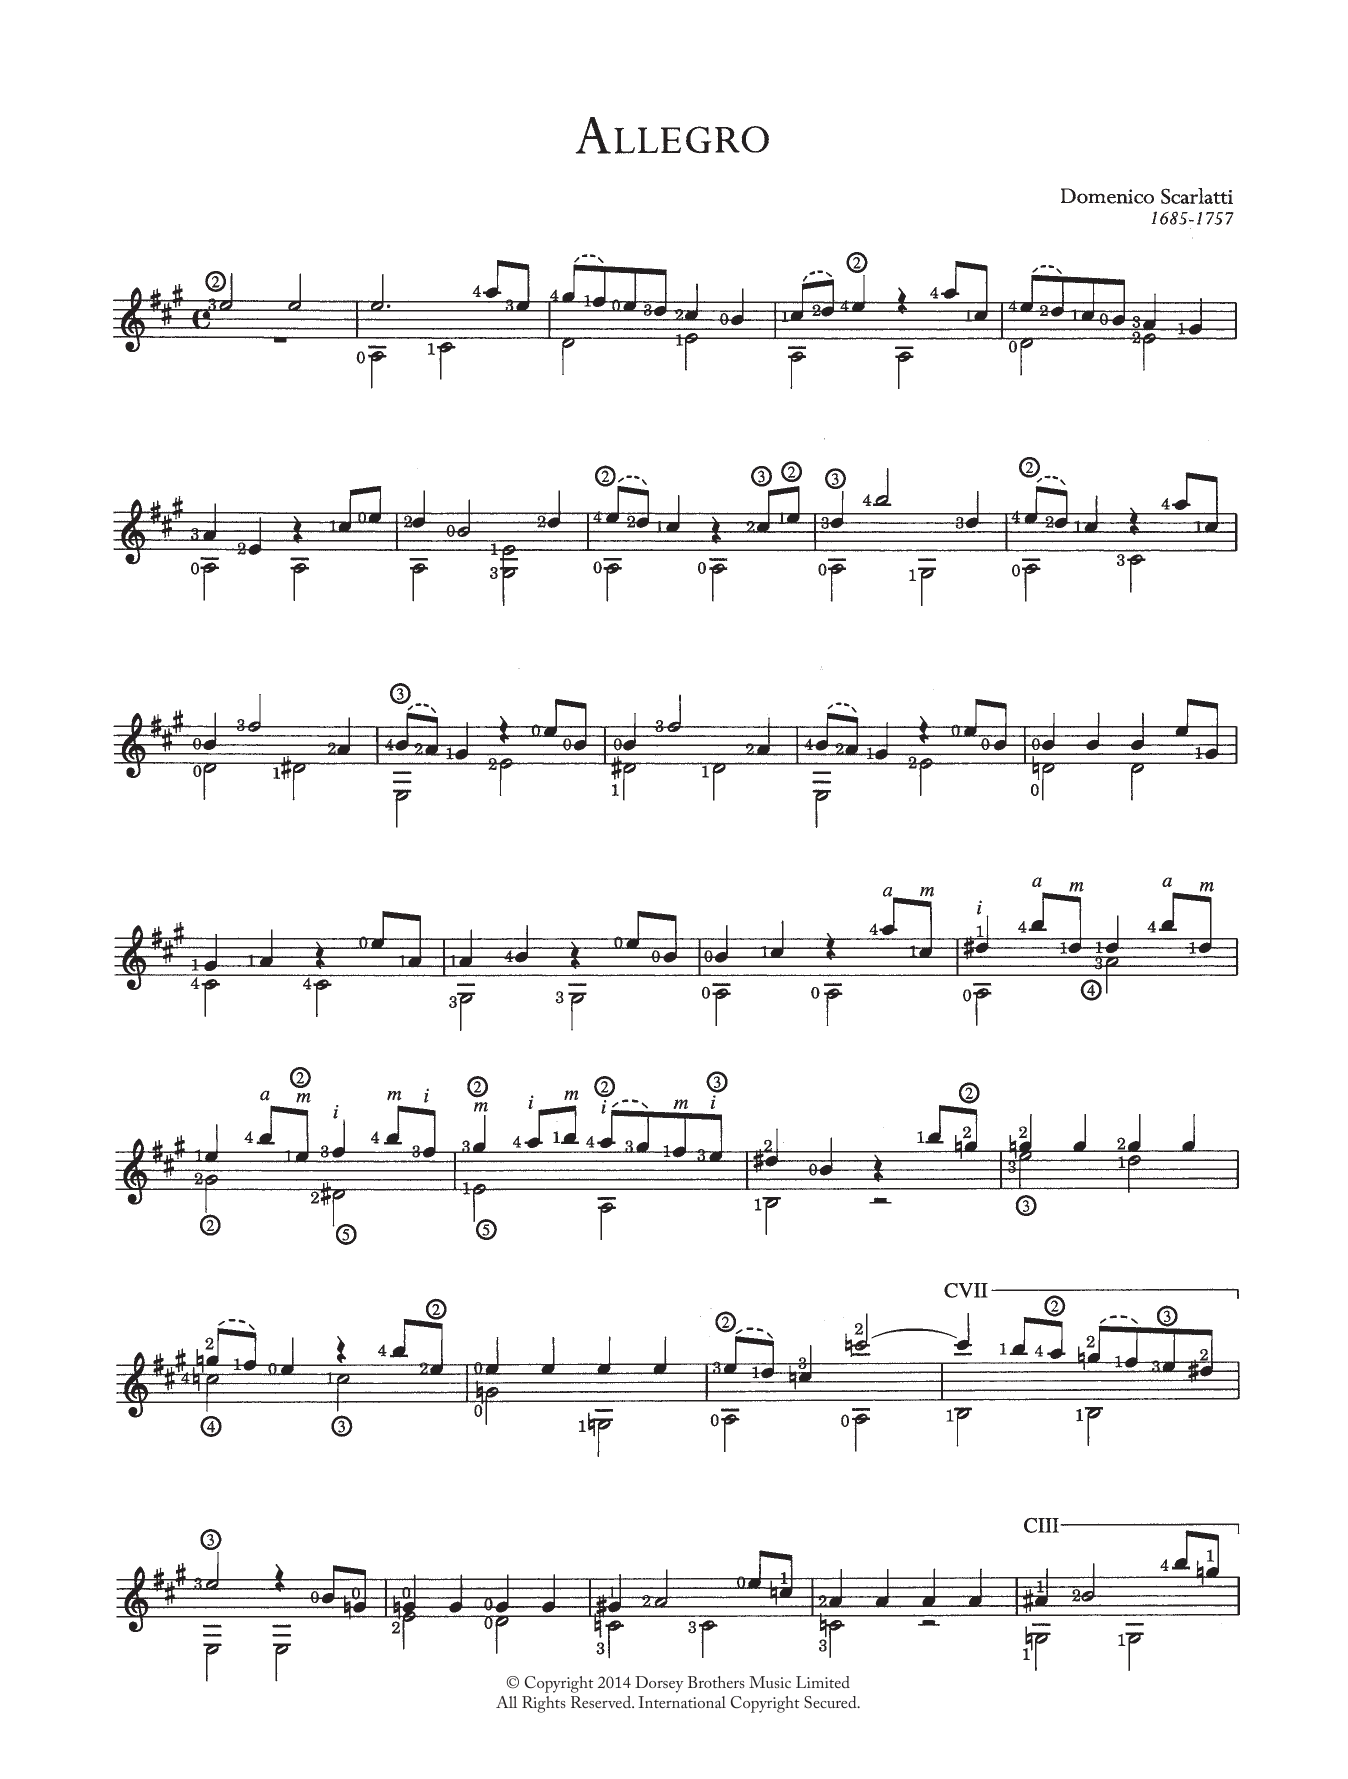 Domenico Scarlatti Allegro Sheet Music Notes & Chords for Guitar - Download or Print PDF